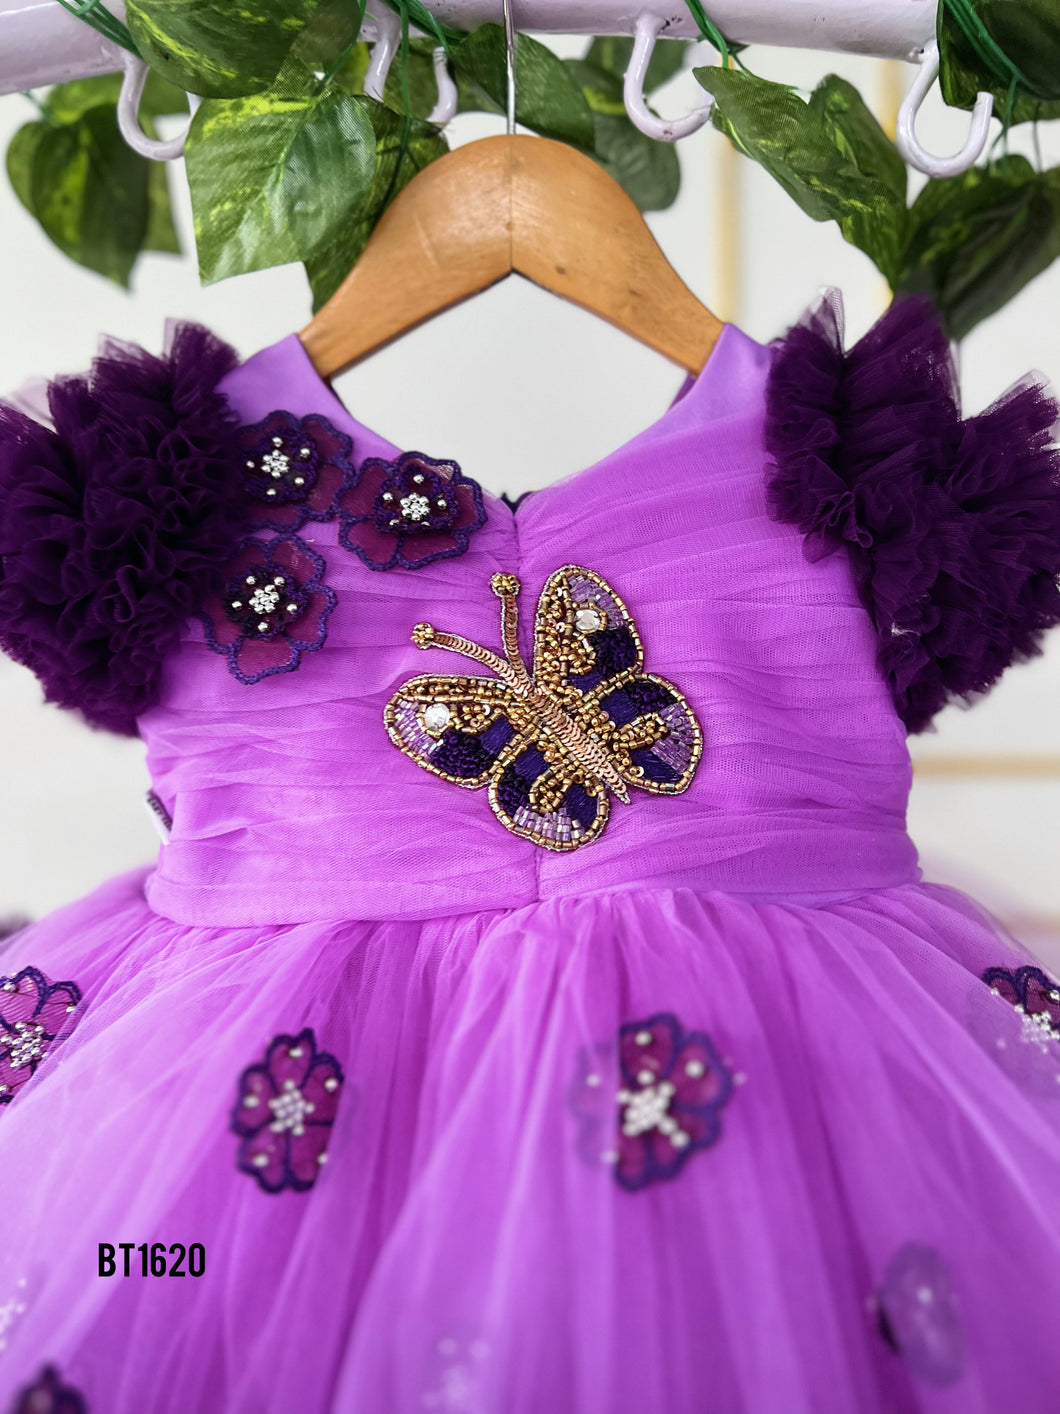 BT1620 Purple Petal Princess Dress - Bloom in Enchantment!